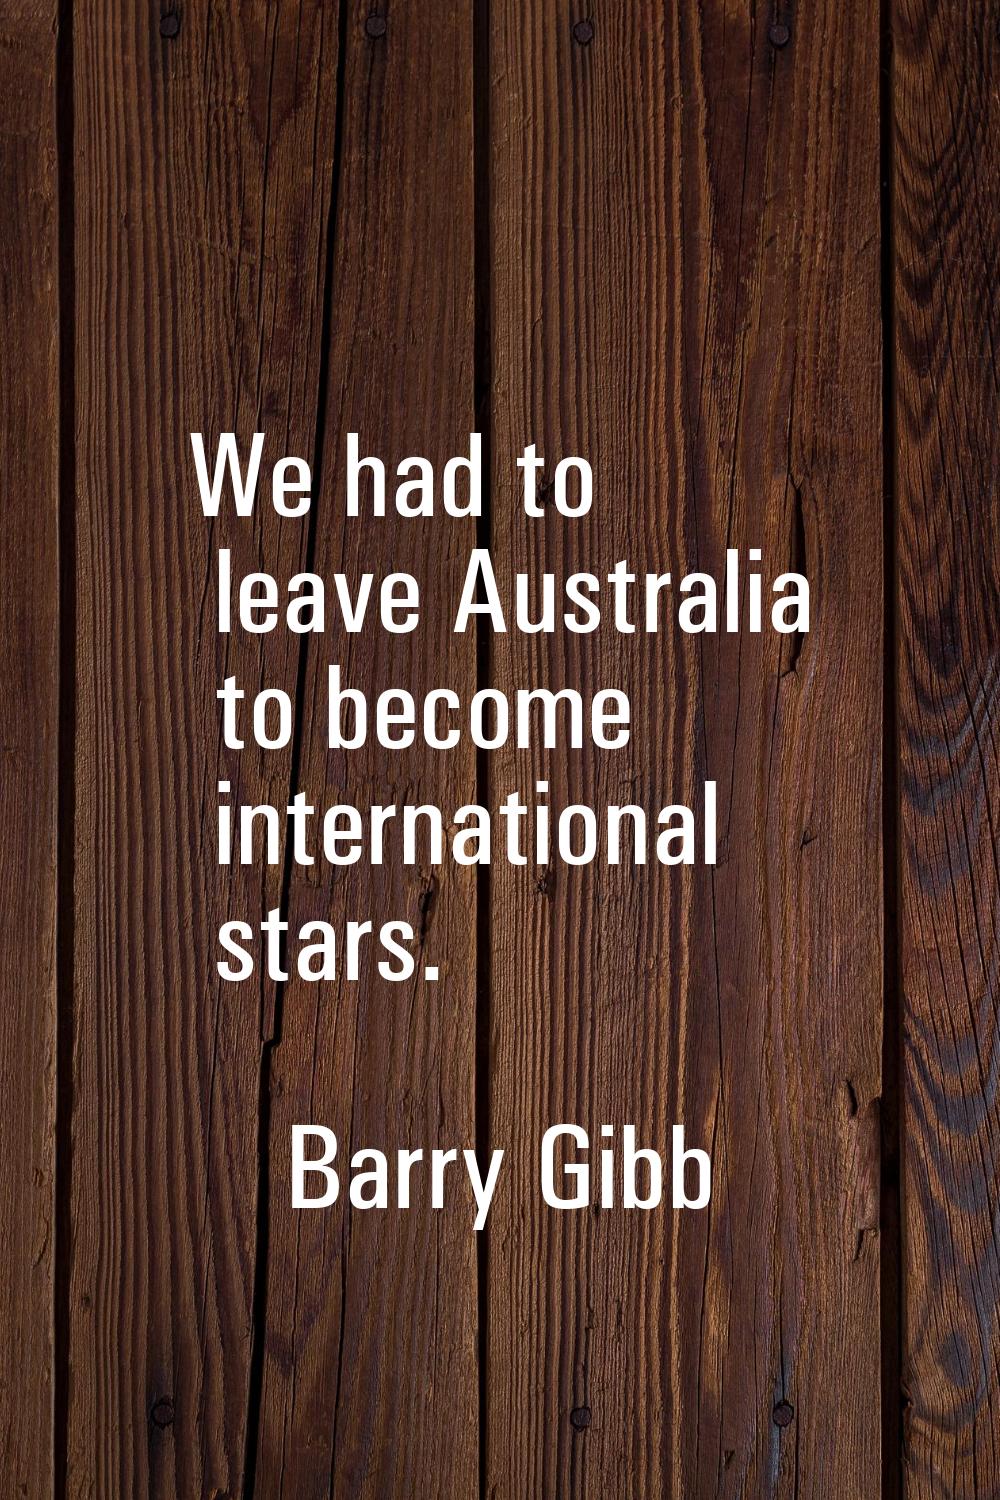 We had to leave Australia to become international stars.